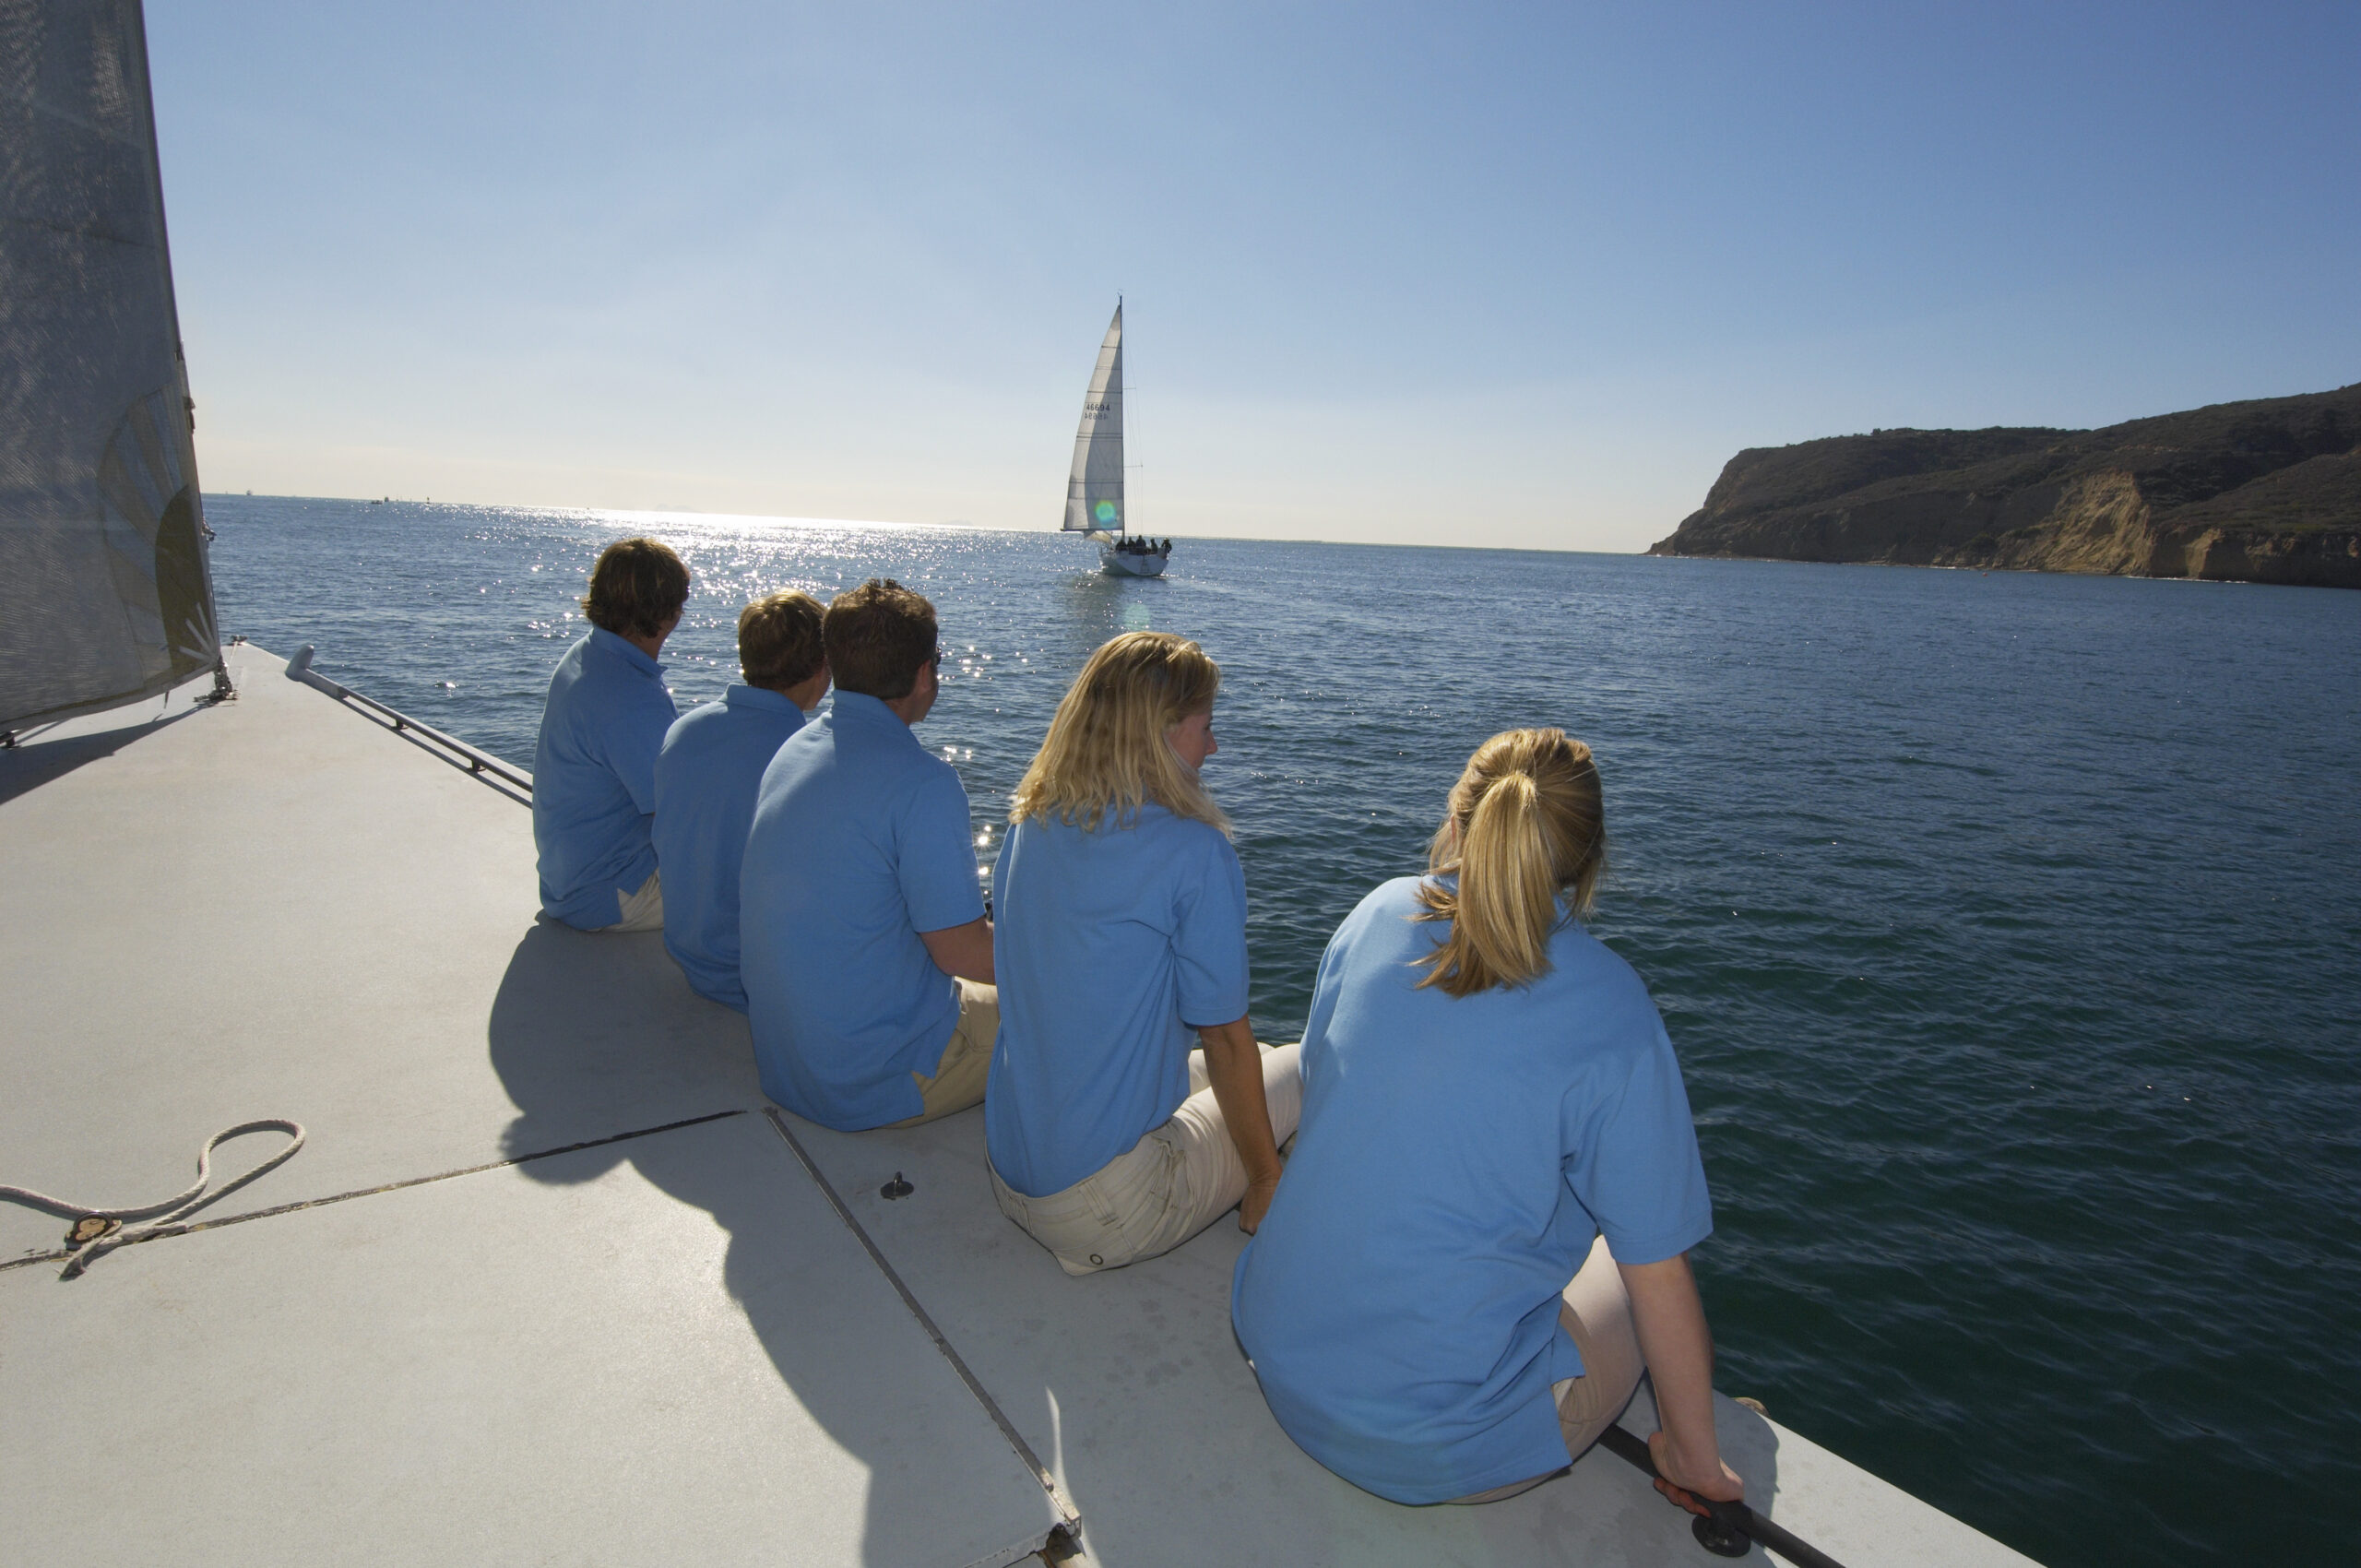 sailing-team-sitting-on-boat